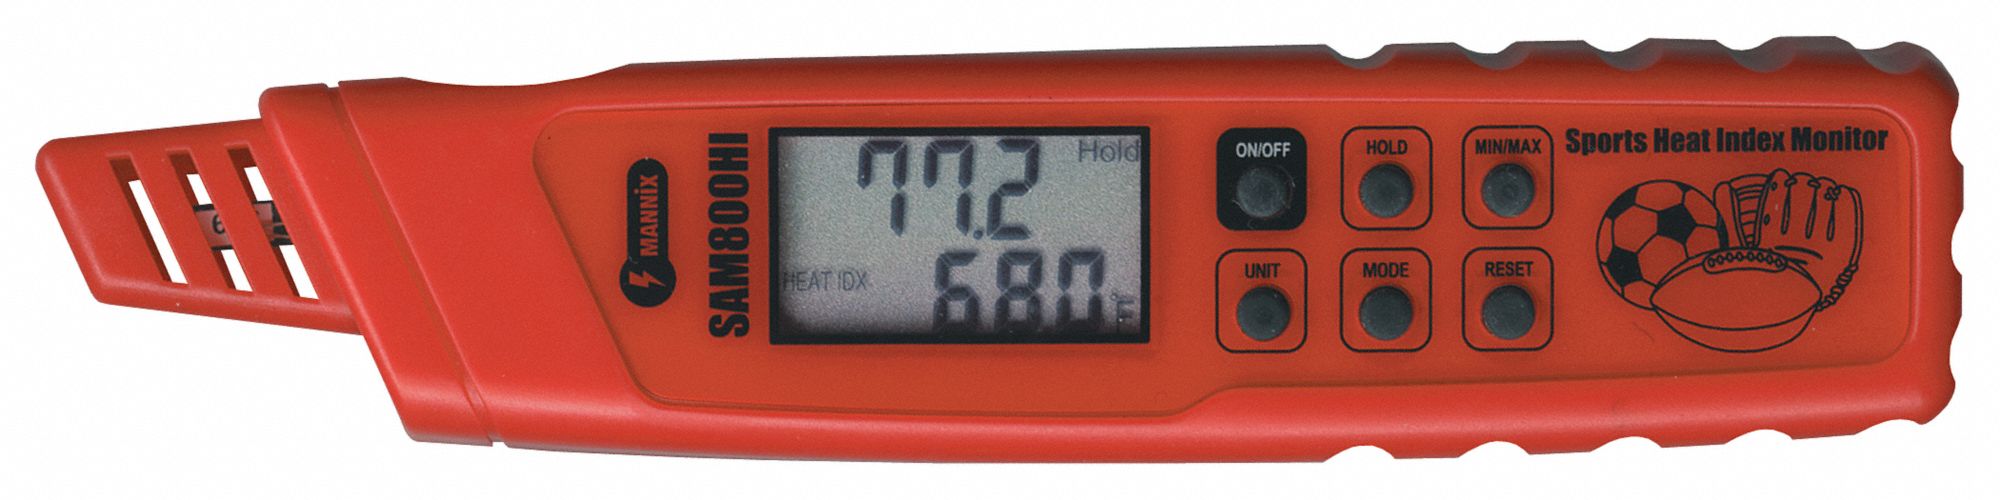 8GLU1 - Digital Pckt Heat Index Monitor 0-100Pct